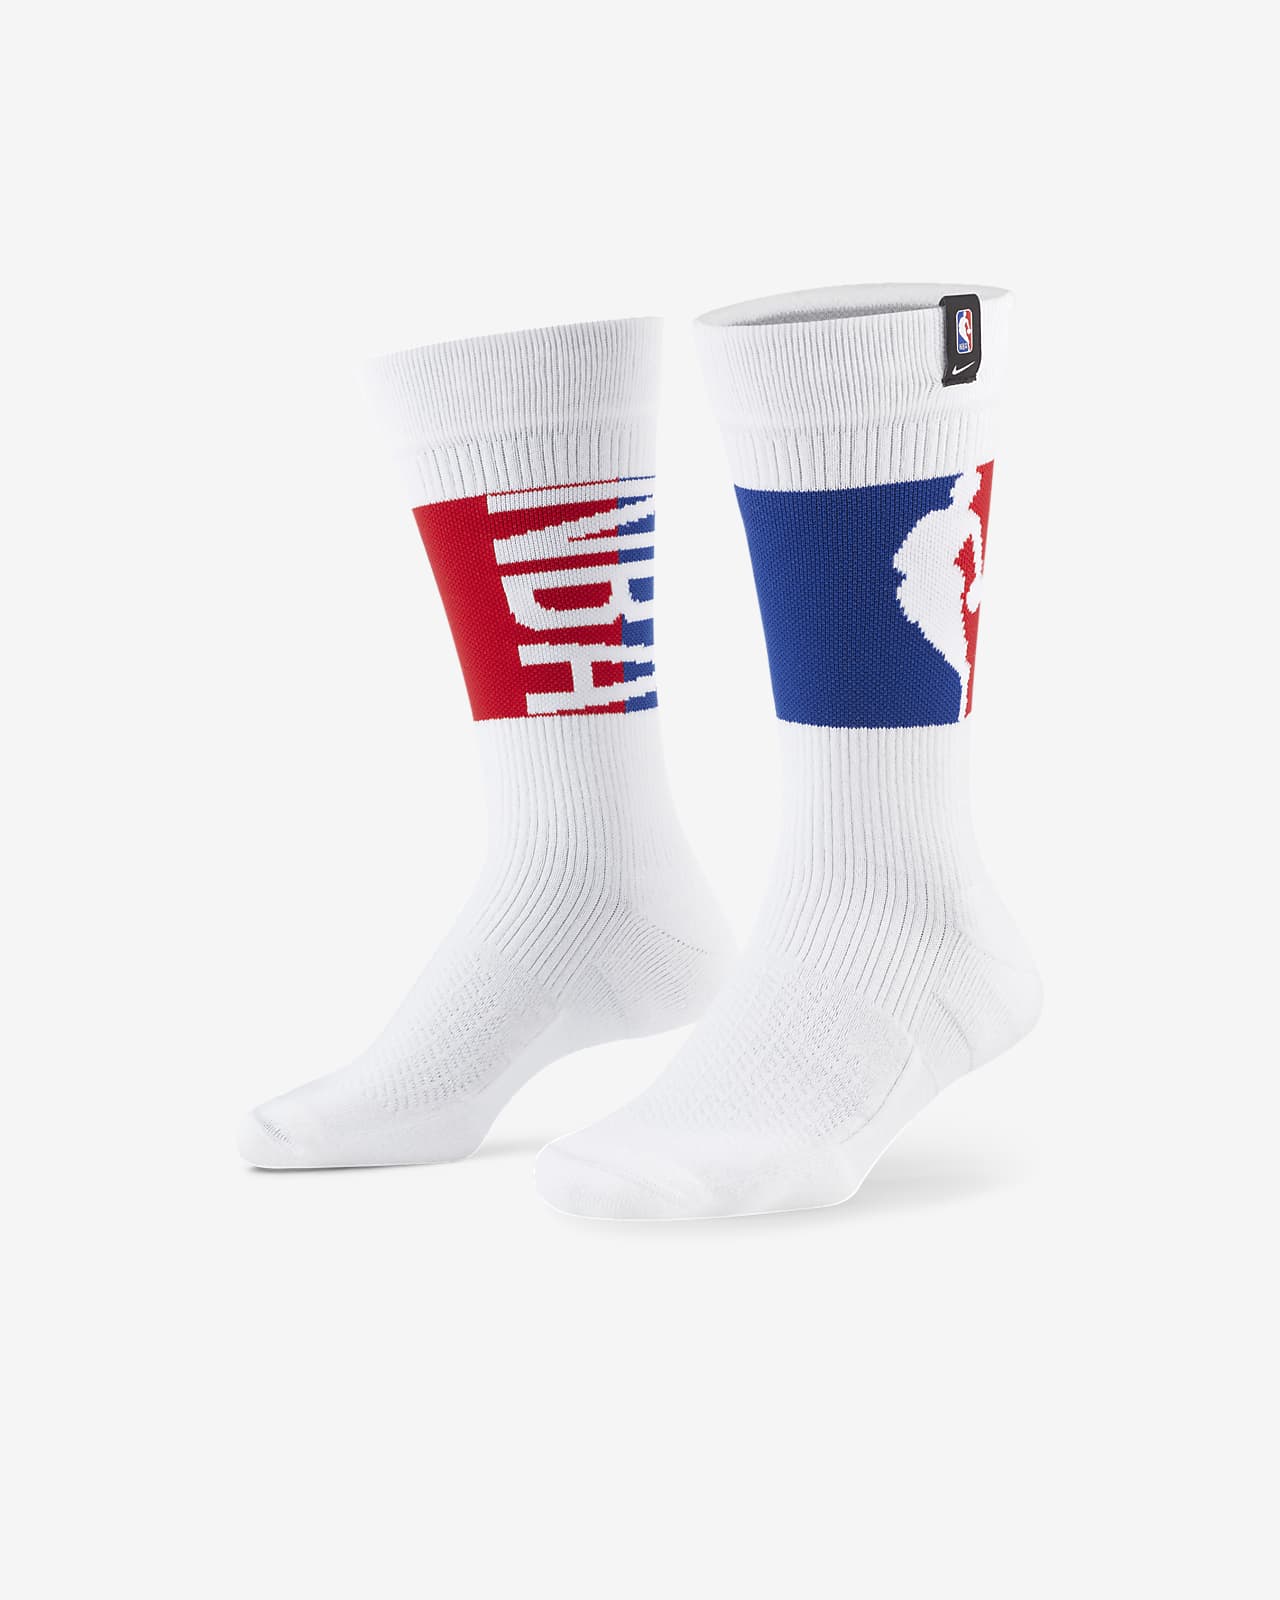 Nike SNKR SOX NBA Crew Socks